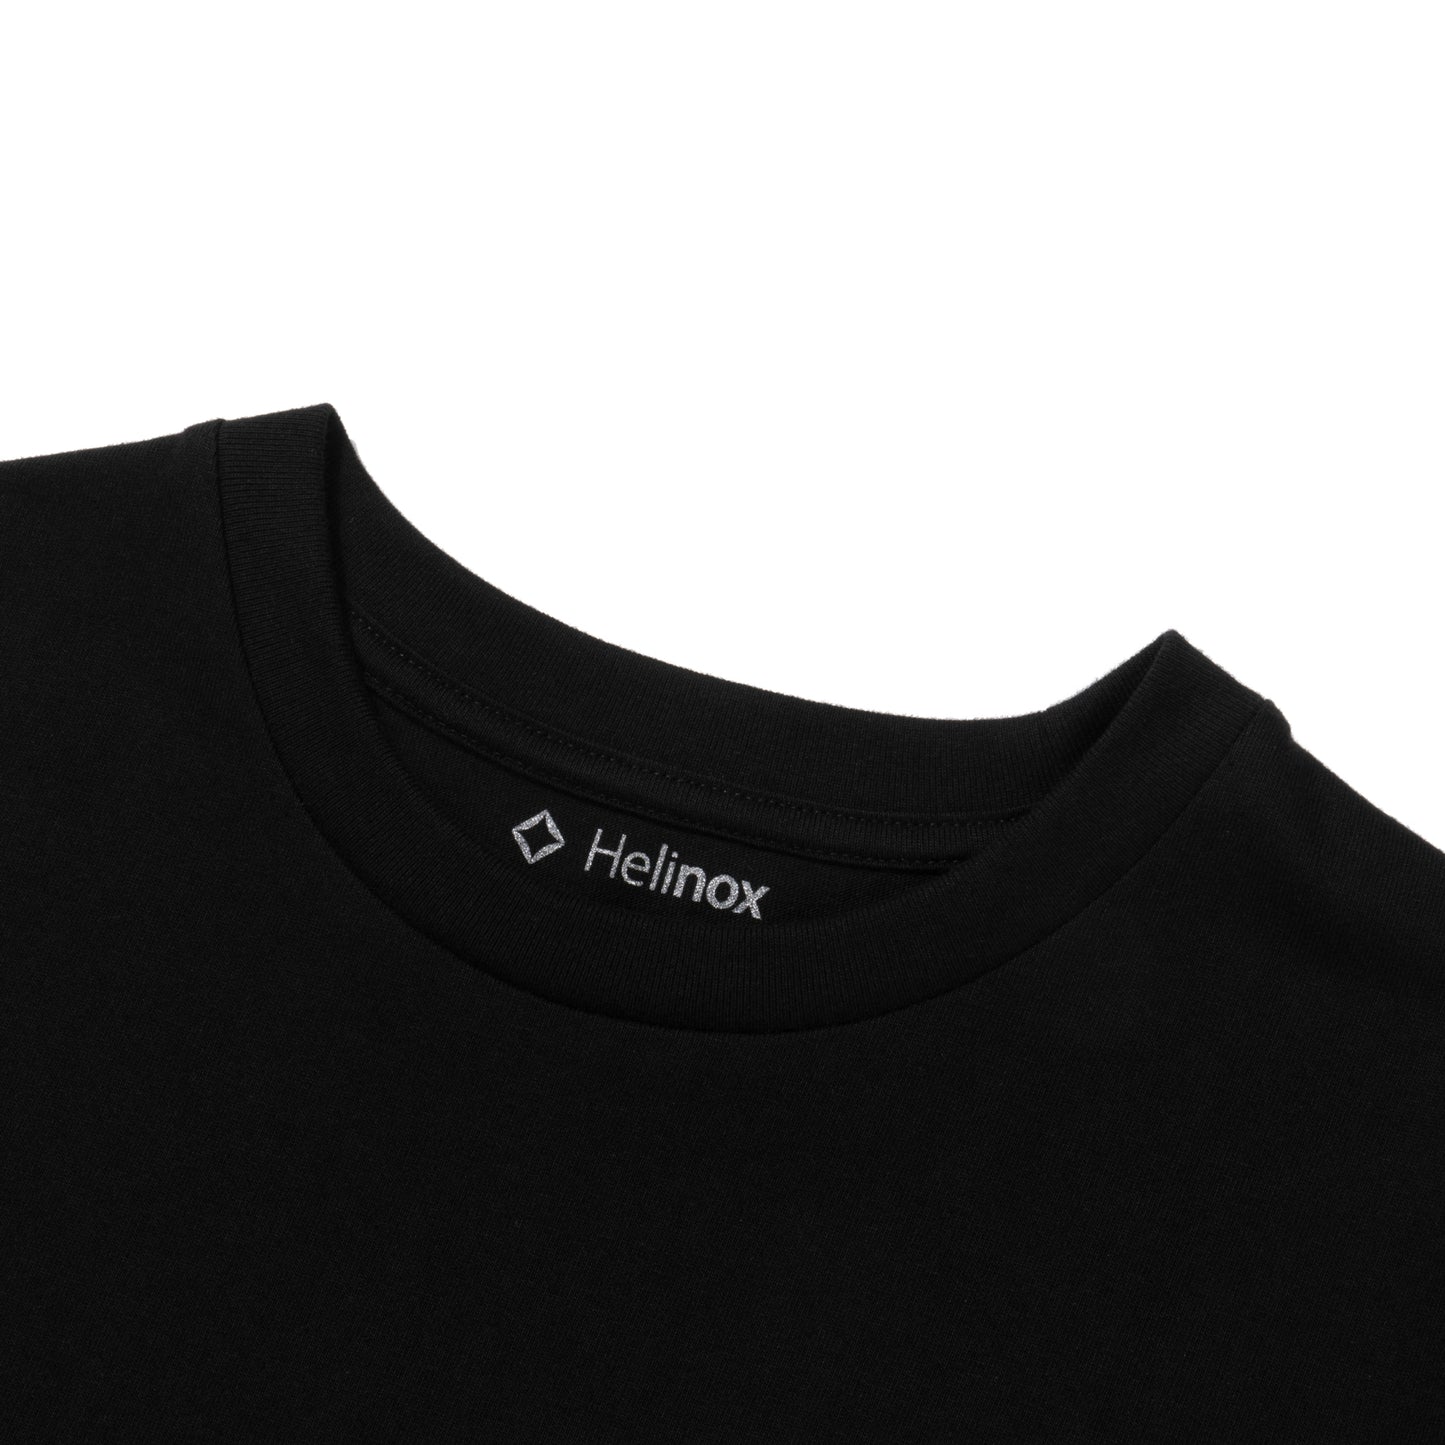 Glow Edition Pocket T-shirt - Black